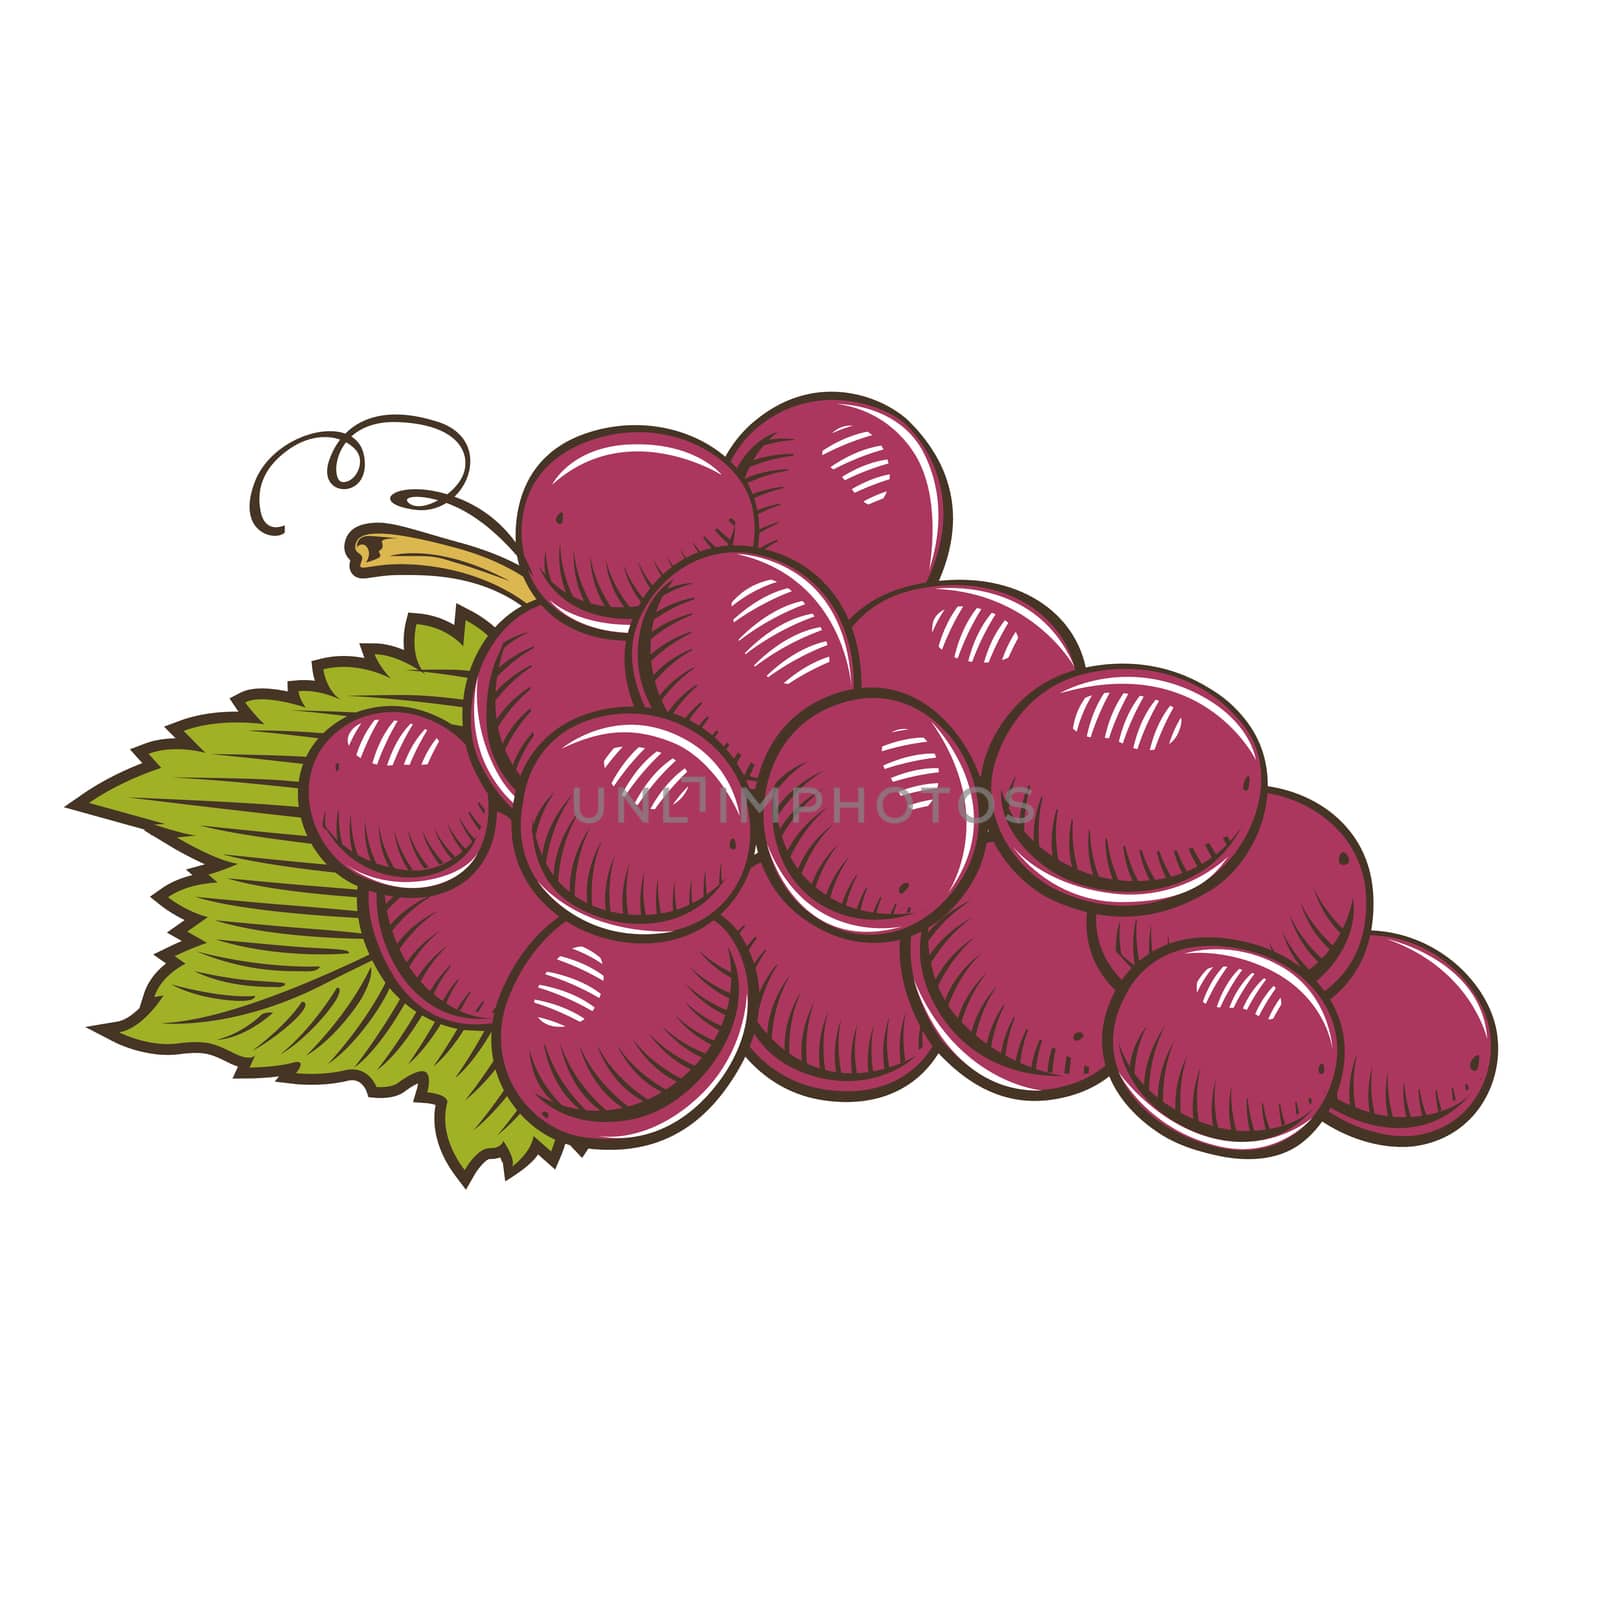 Grapes in vintage style. Line art illustration.